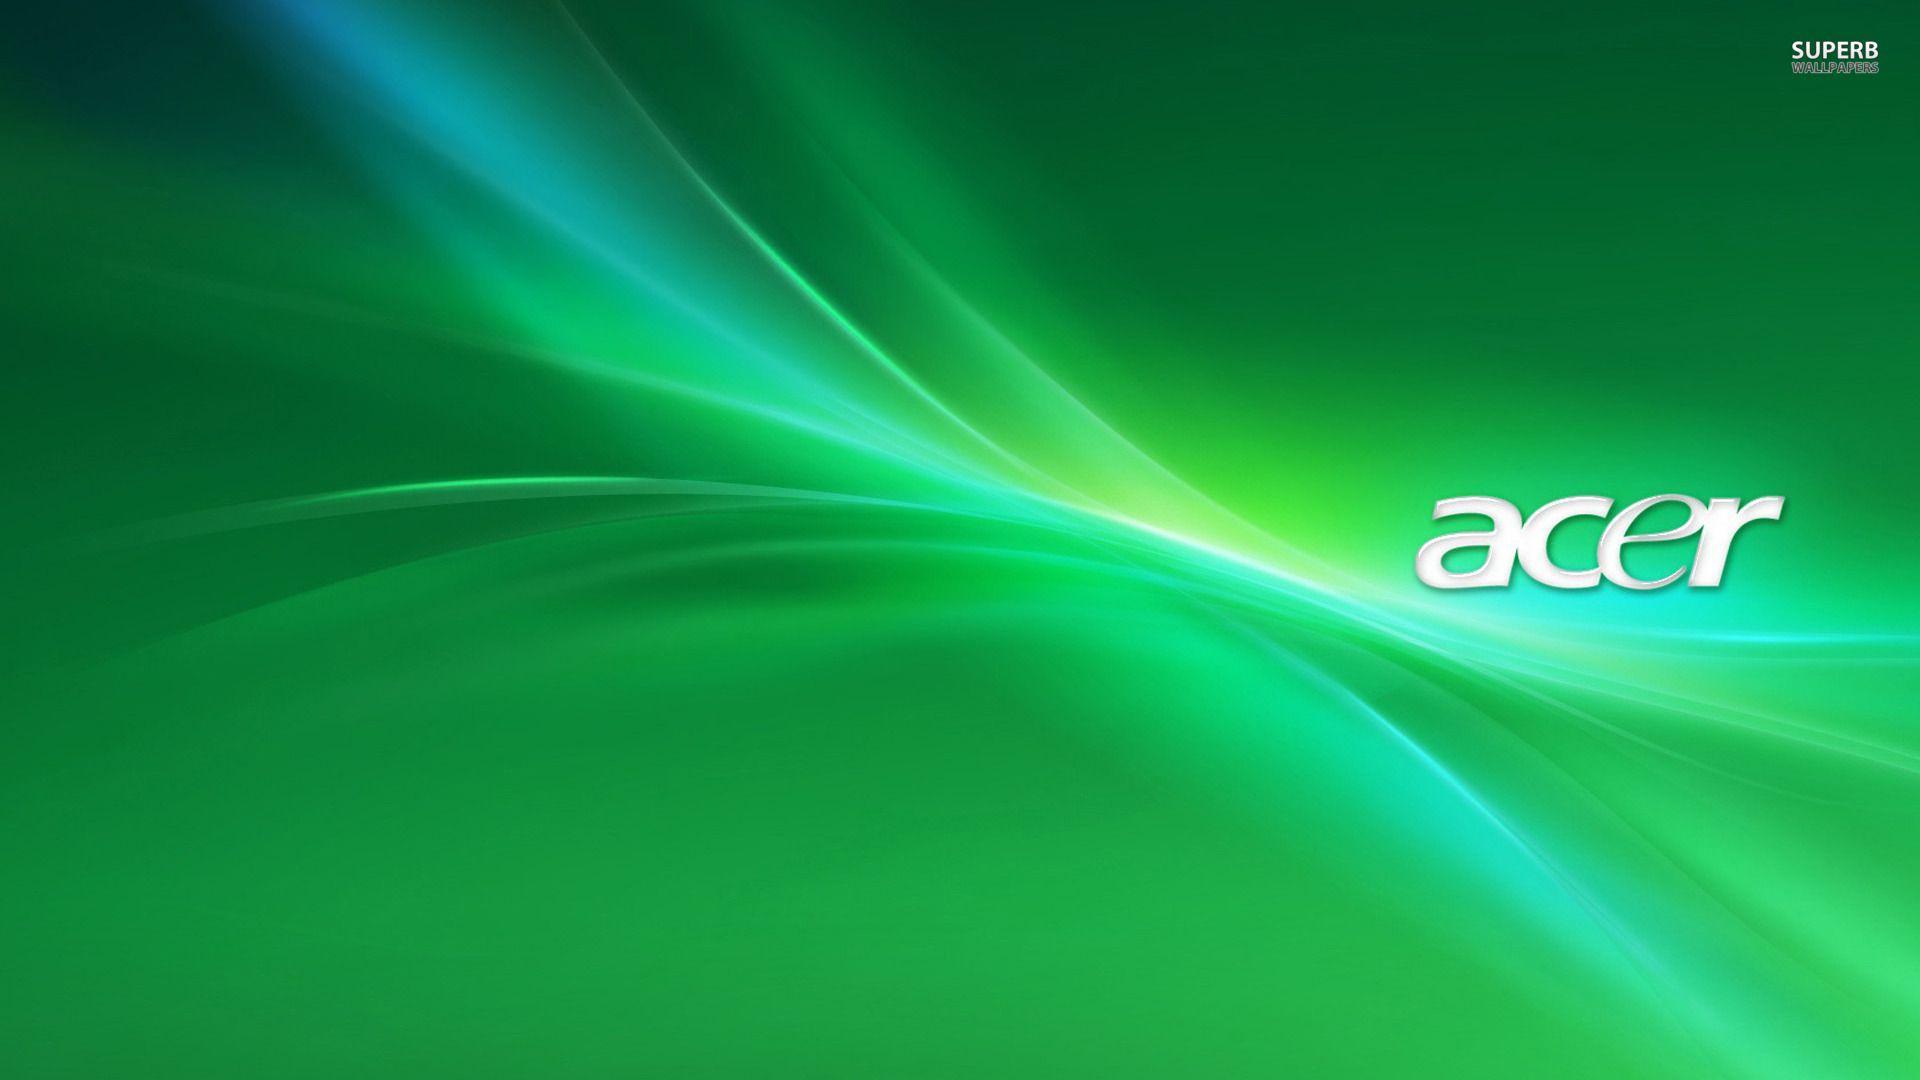 Green Acer logo wallpaper wallpaper - #